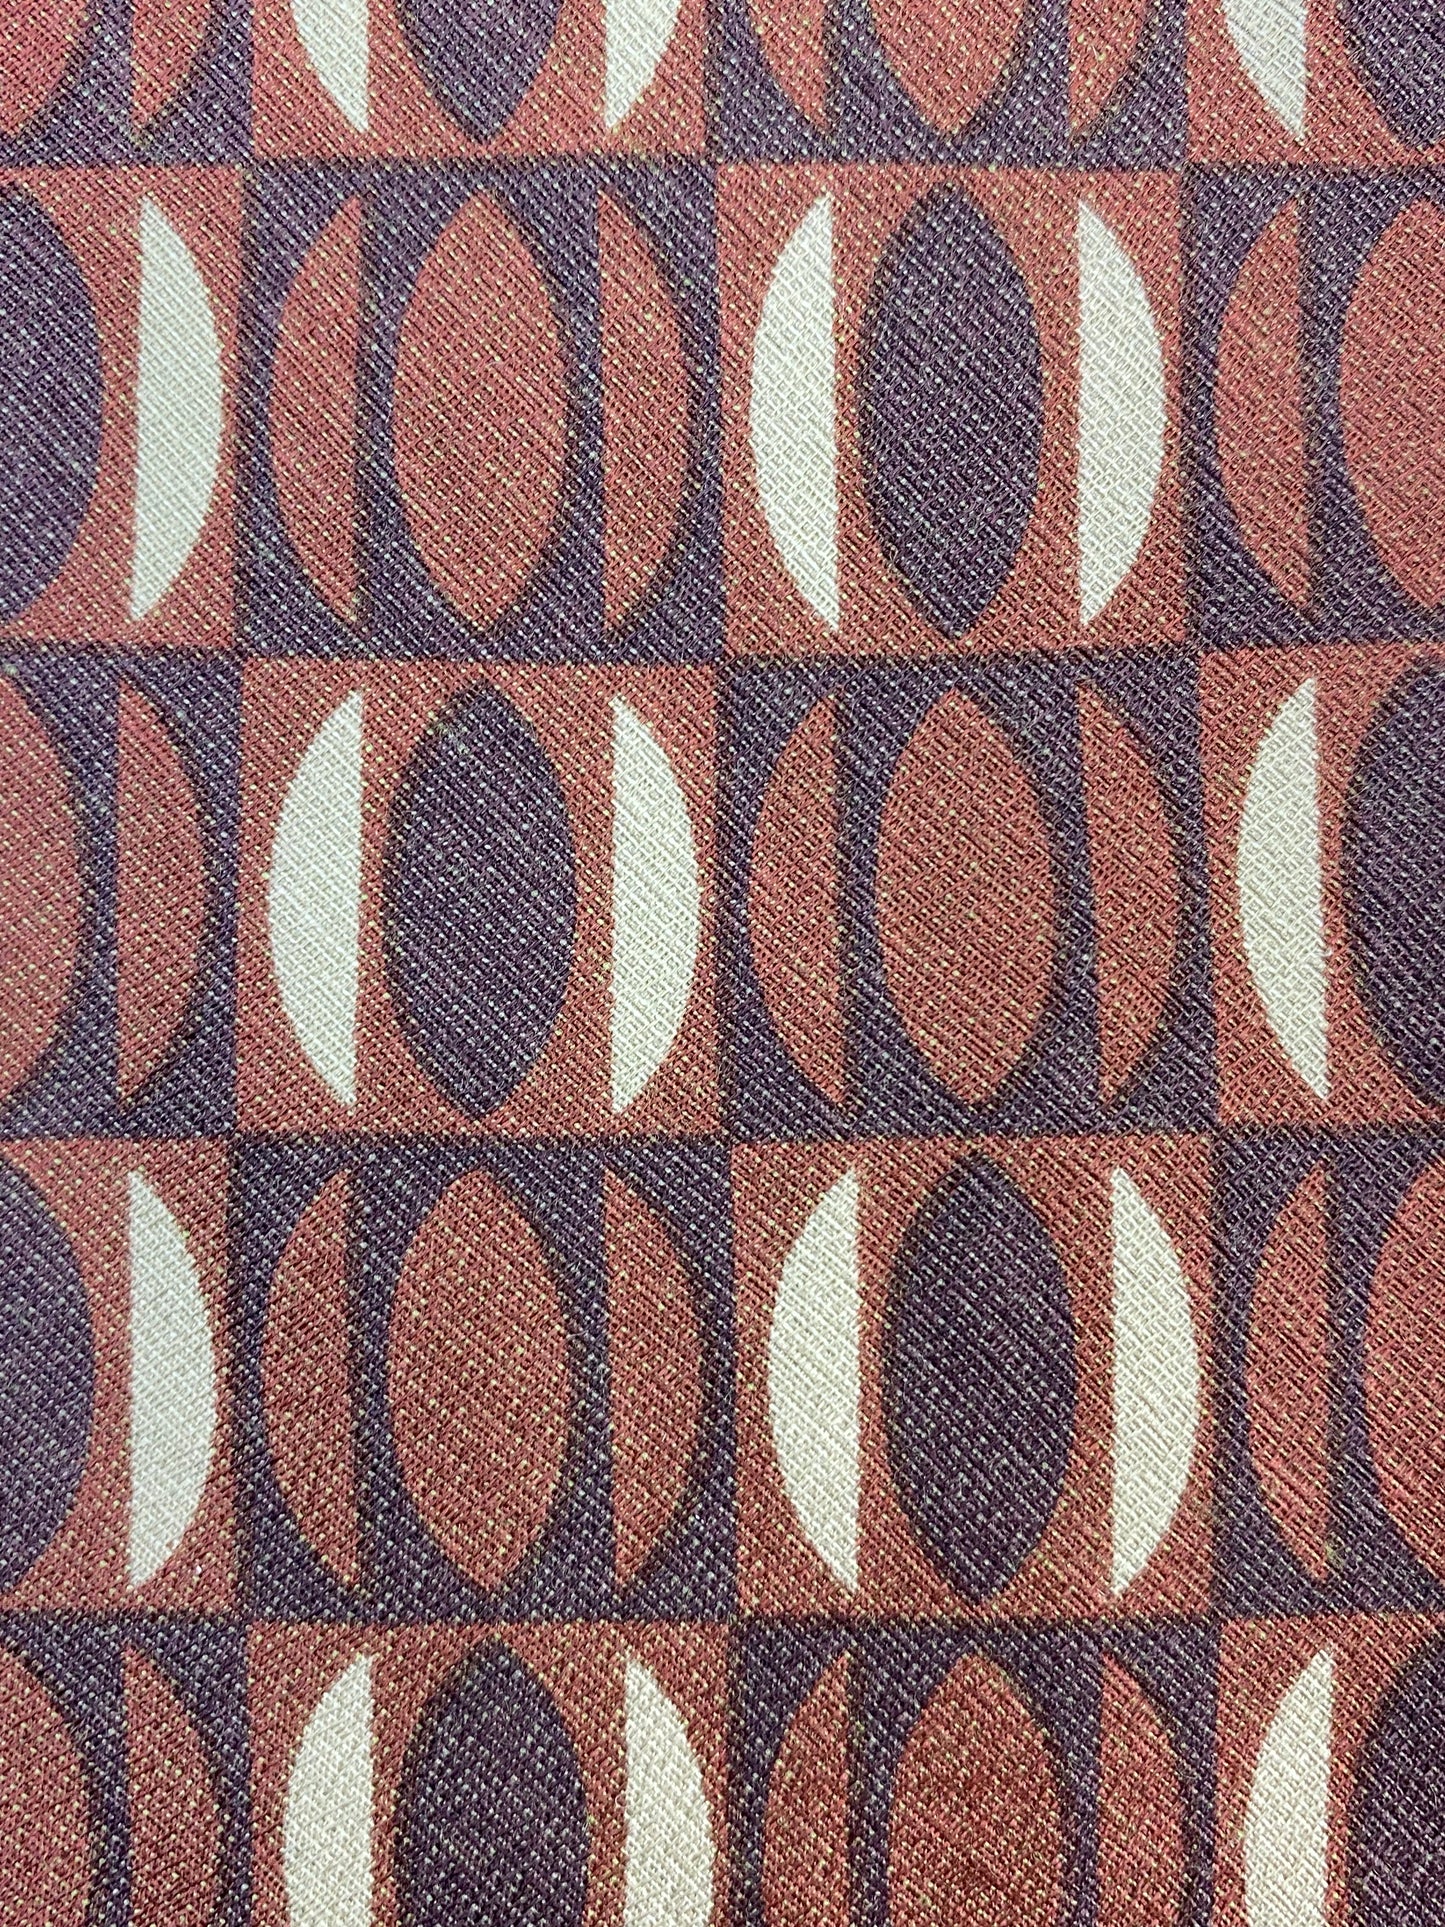 Close-up of: 90s Deadstock Silk Necktie, Men's Vintage Brown Geometric Pattern Tie, NOS